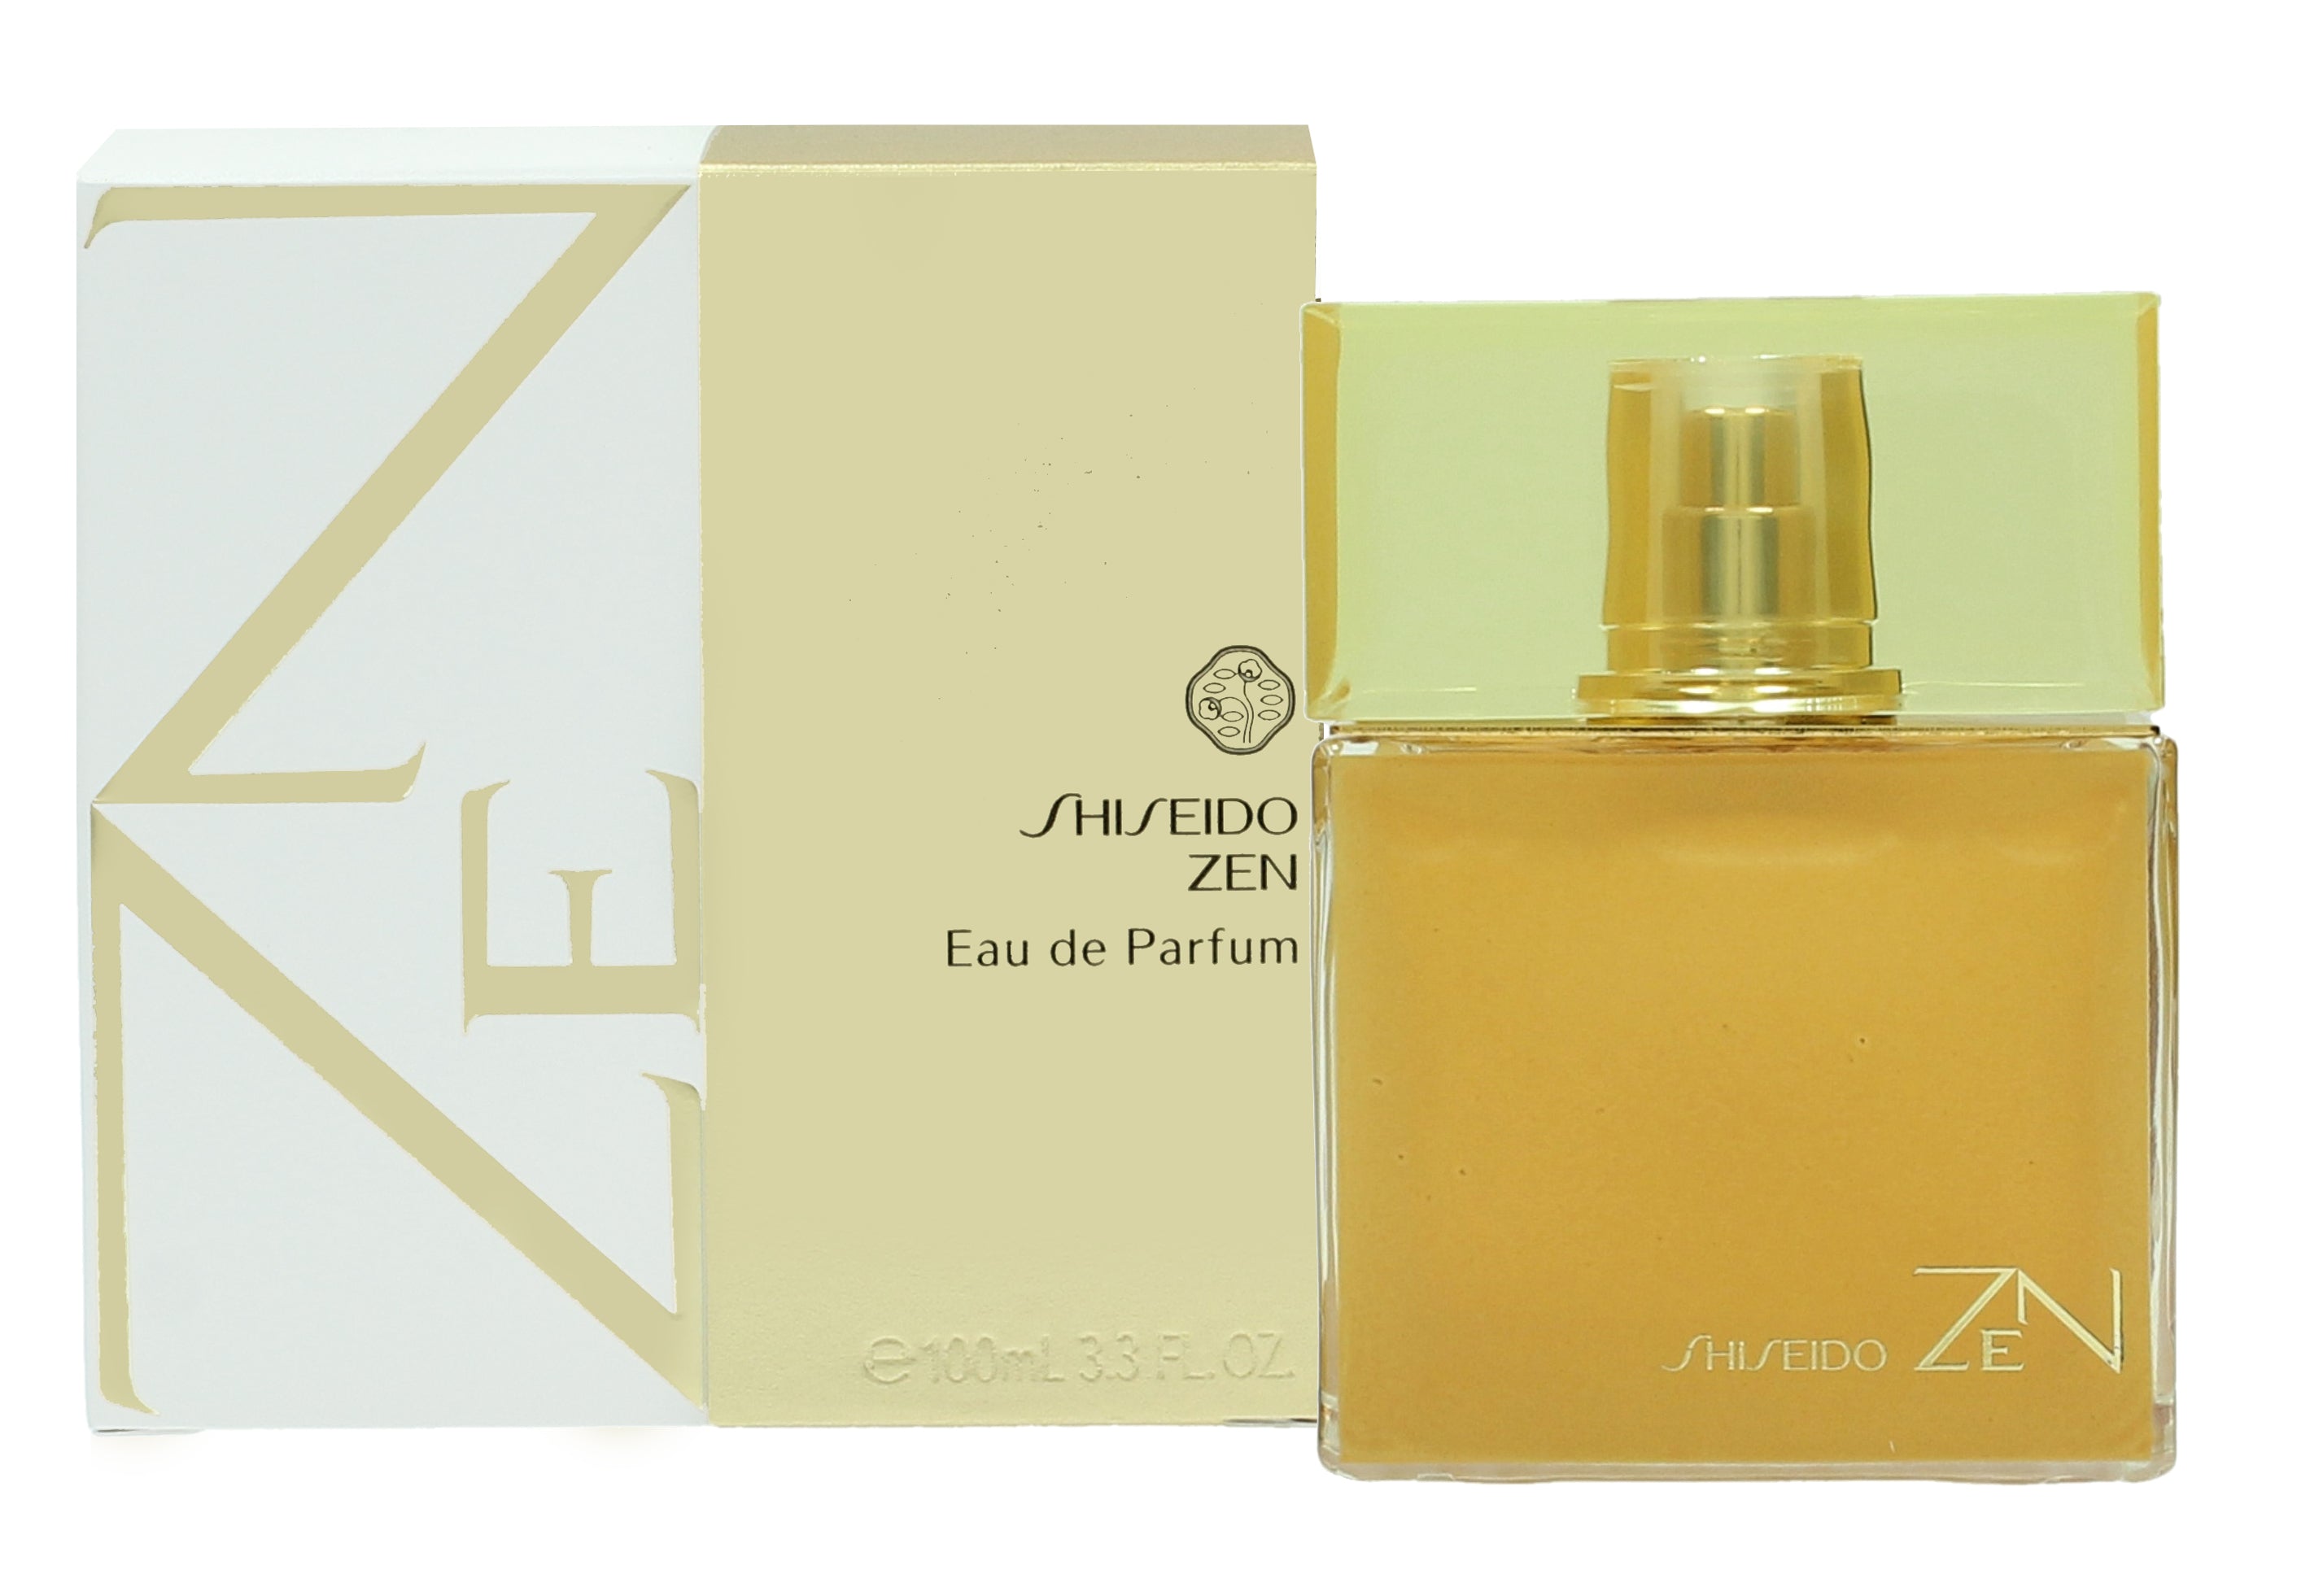 View Shiseido Zen Eau de Parfum 100ml Spray information